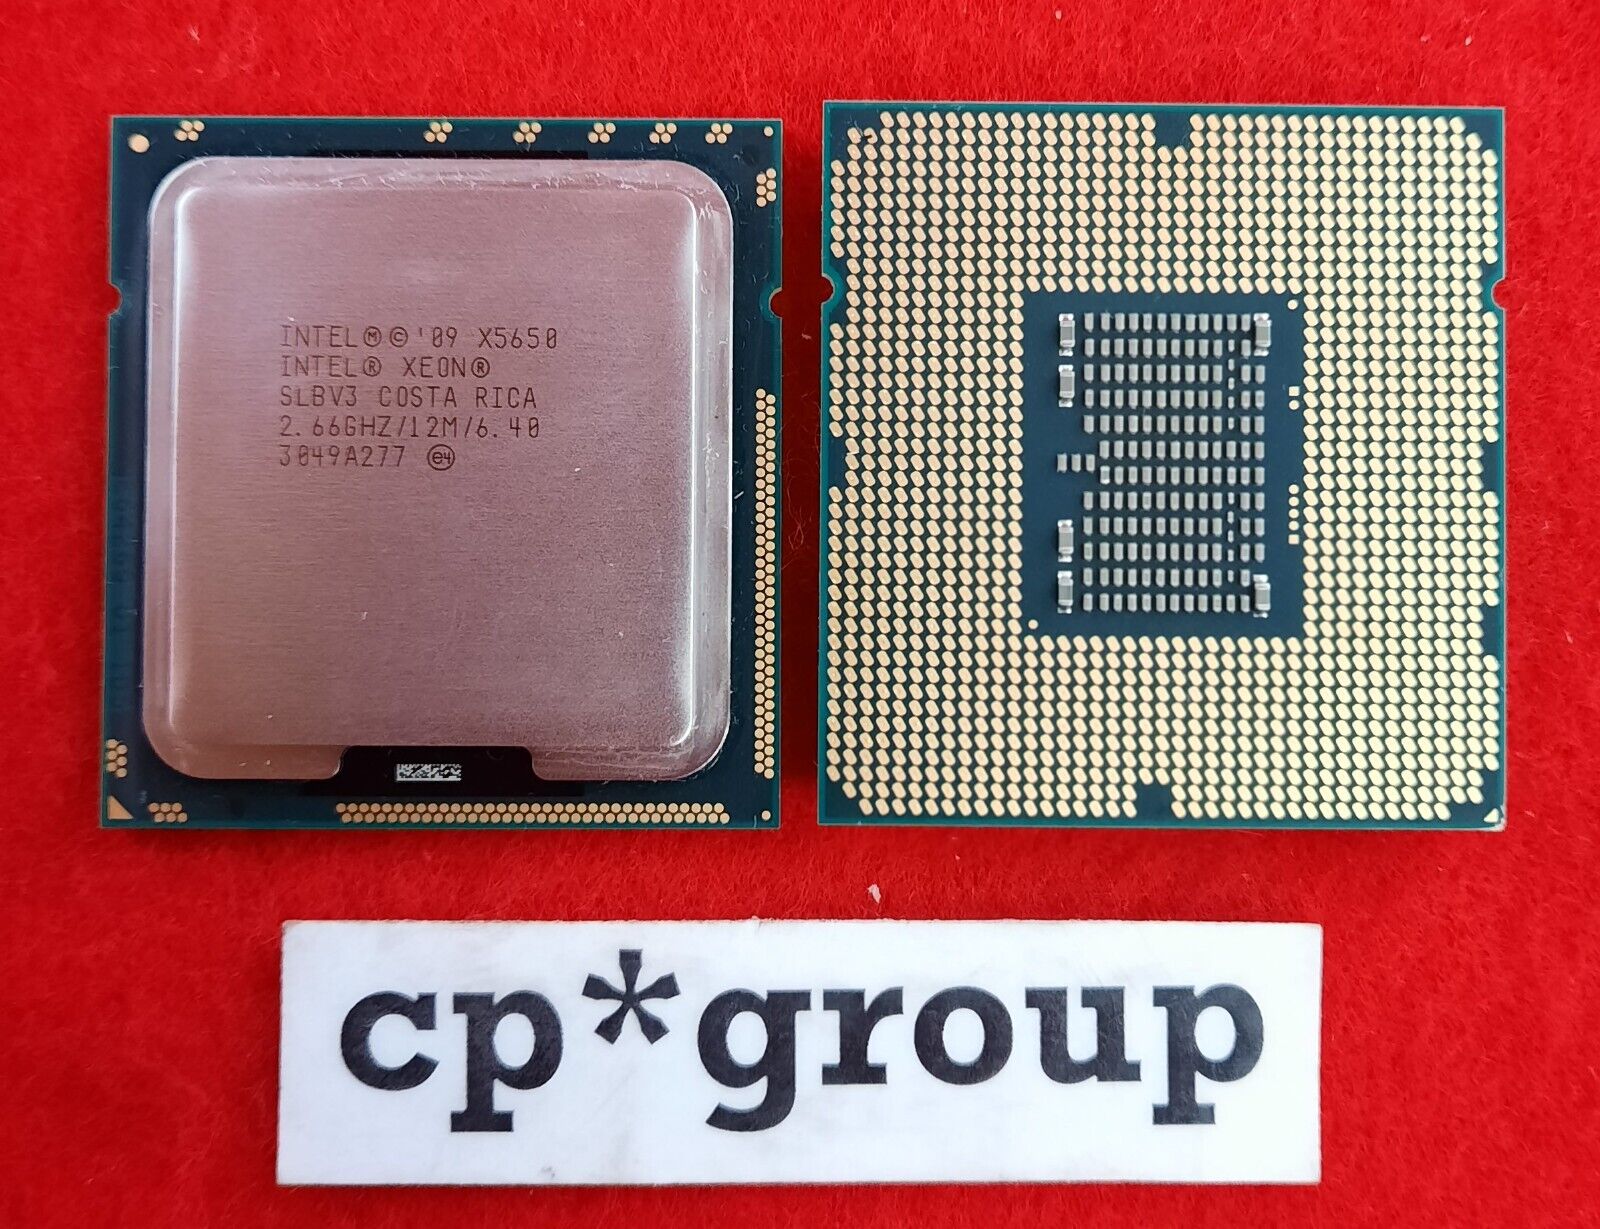 LOT OF 2 Intel Xeon X5650 2.66GHz 12MB LGA1366 6-core CPU Processor SLBV3